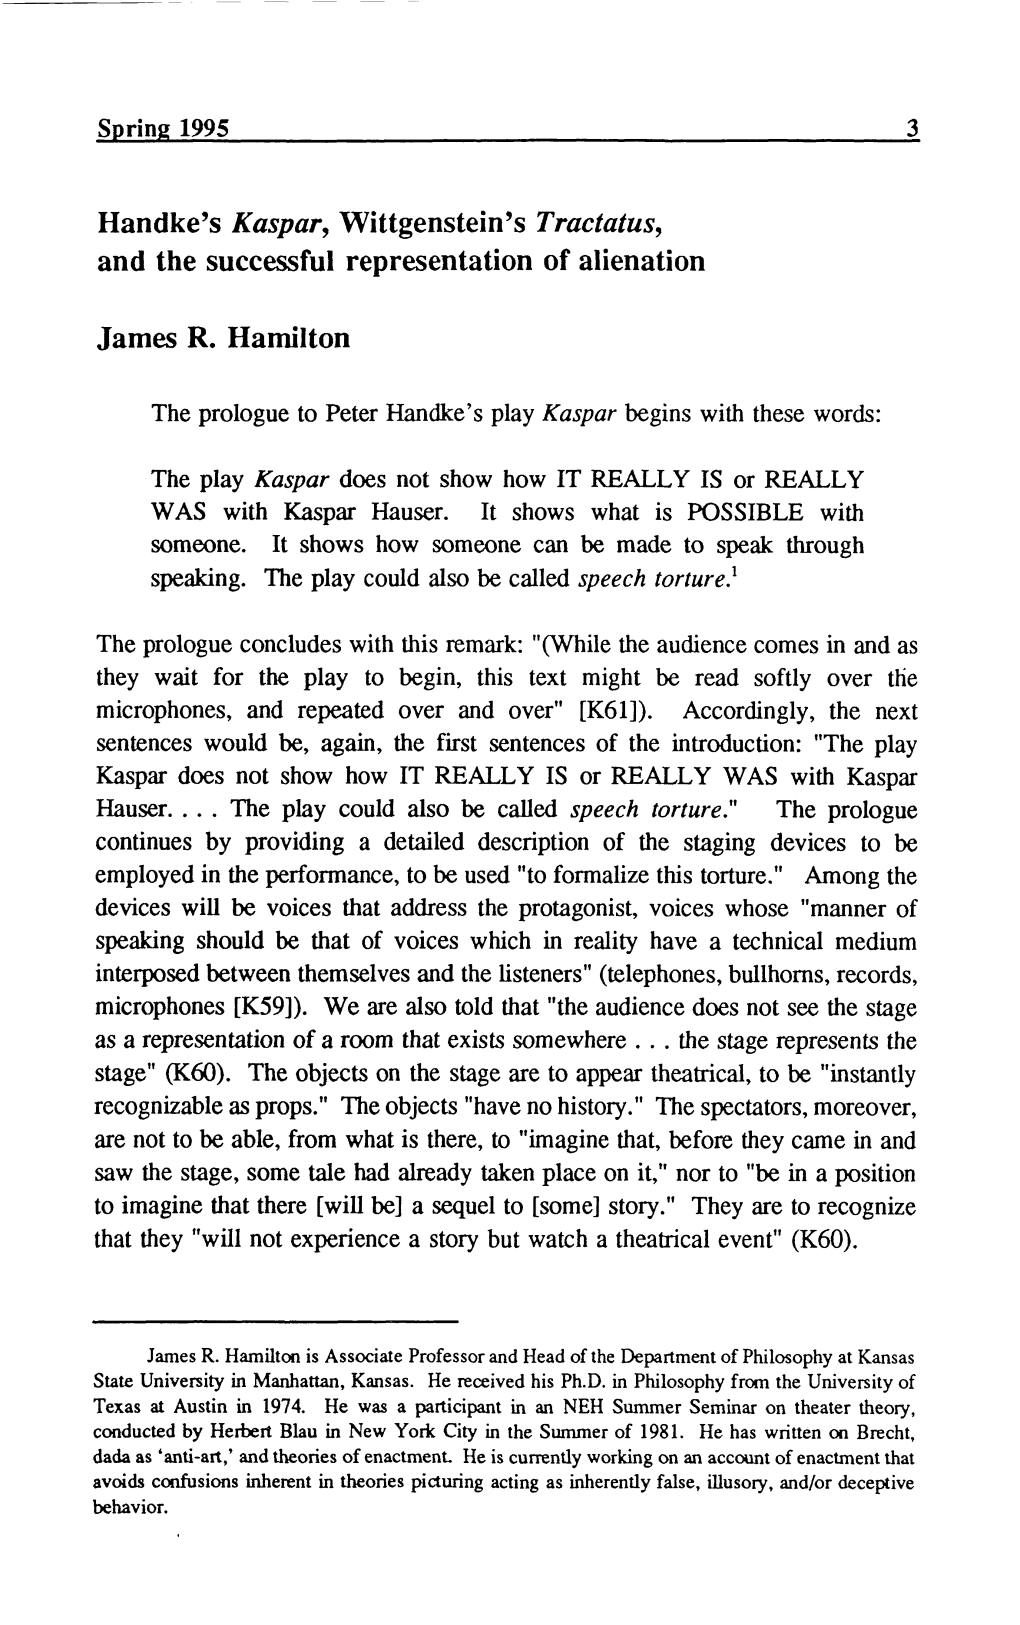 Handke's Kaspar, Wittgenstein's Tractates, and the Successful Representation of Alienation James R. Hamilton